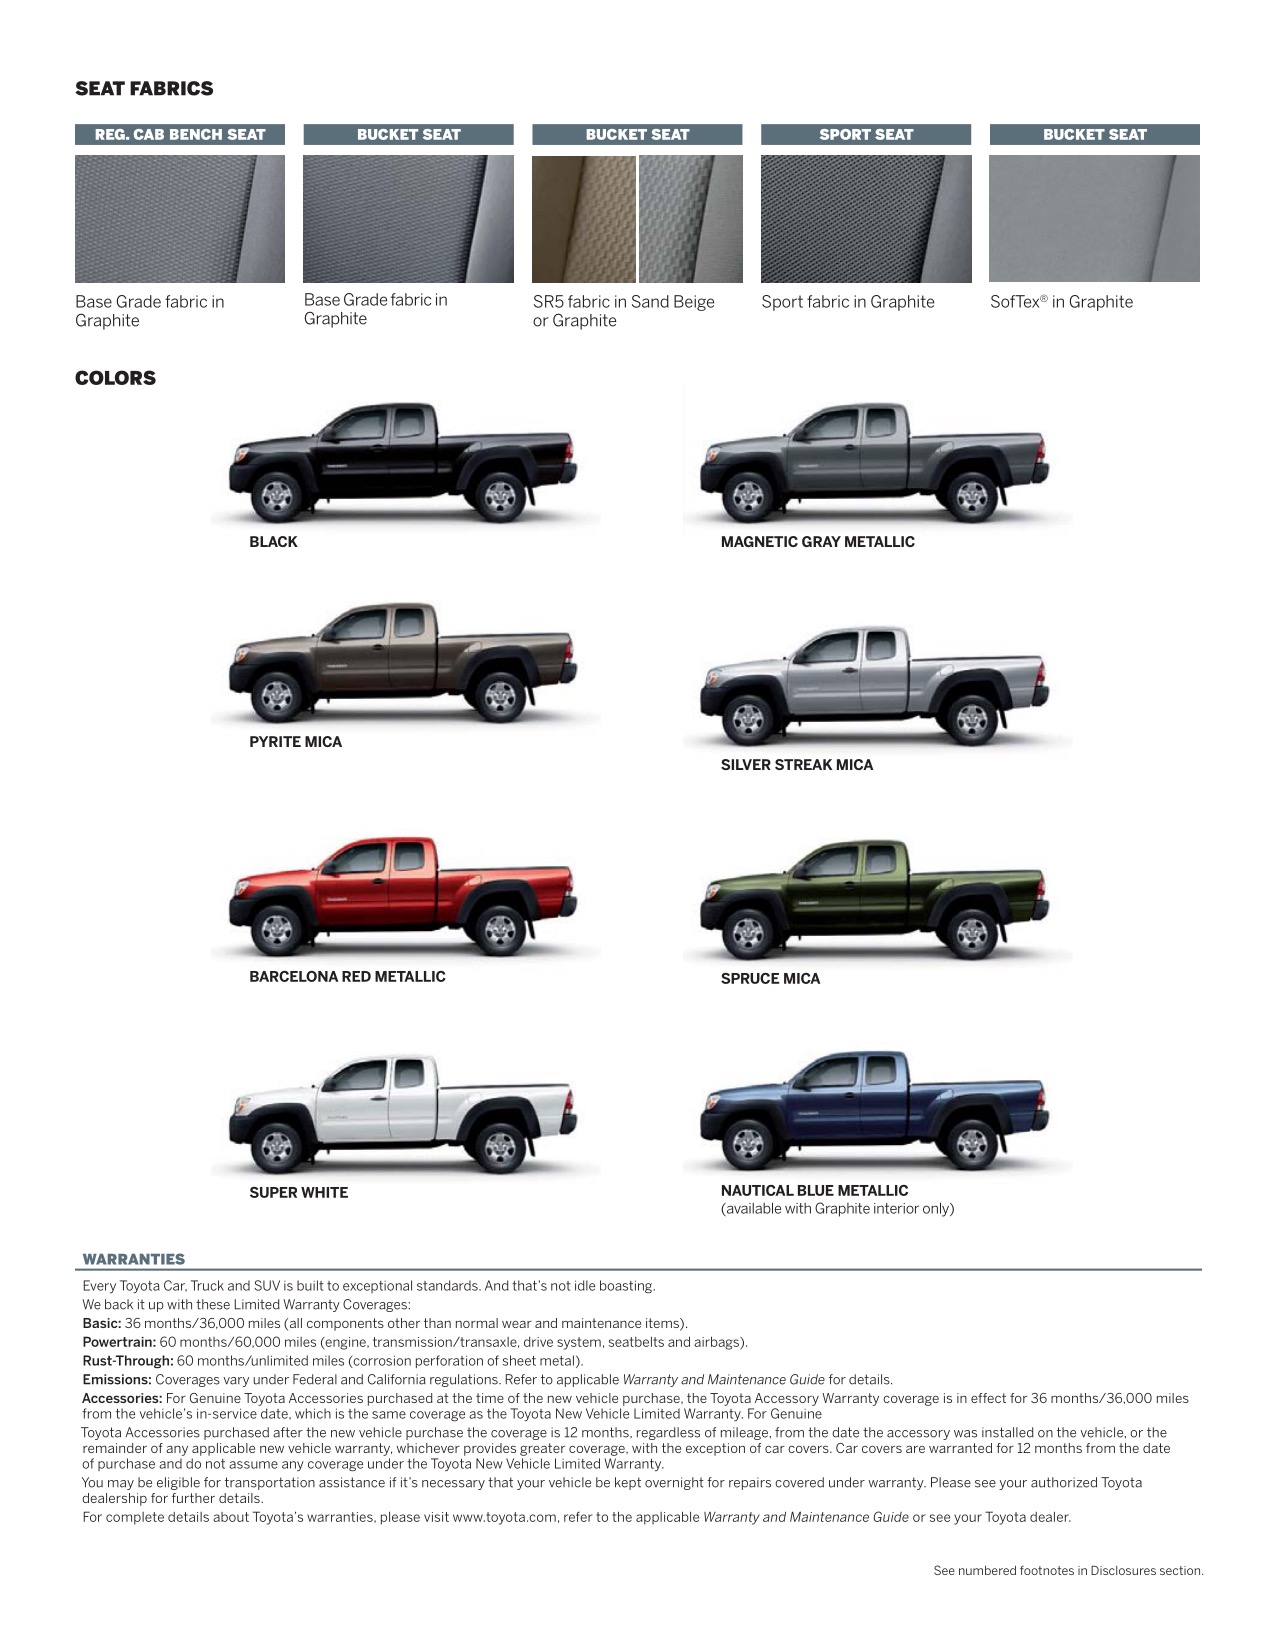 2013 Toyota Tacoma Brochure Page 1